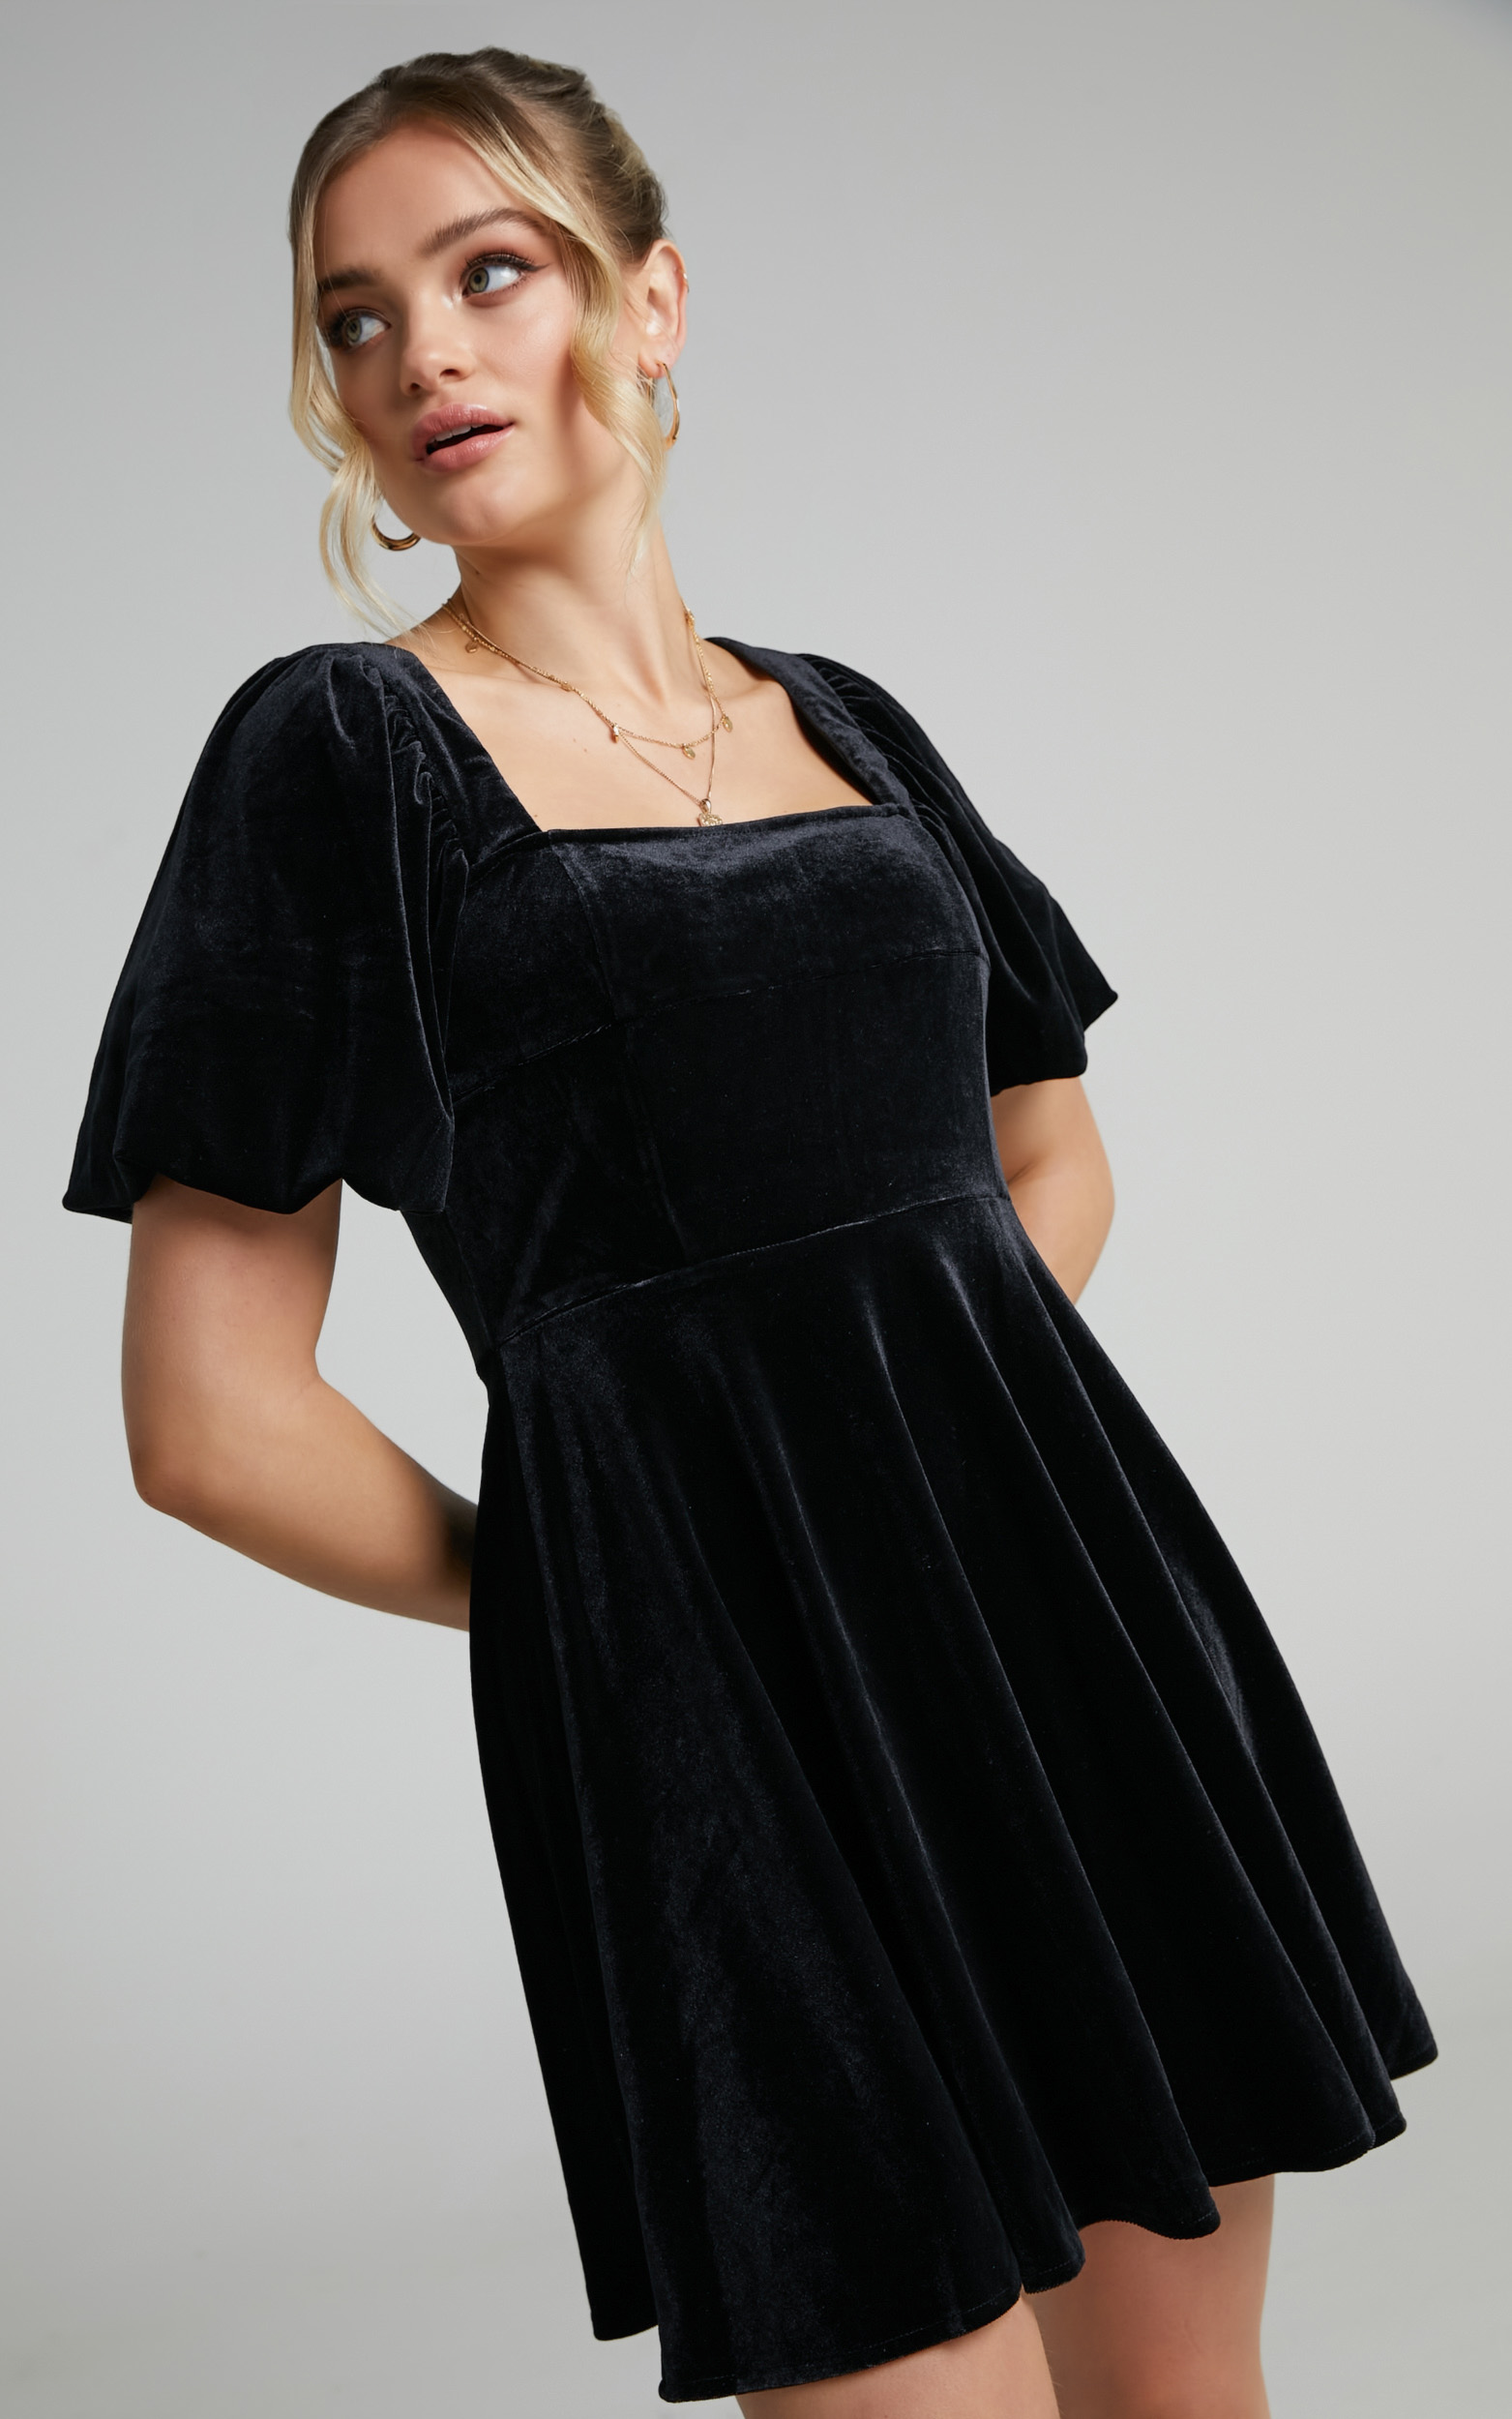 Andi Square Neck Puff Sleeve Mini Dress in Black Velvet - 06, BLK1, hi-res image number null